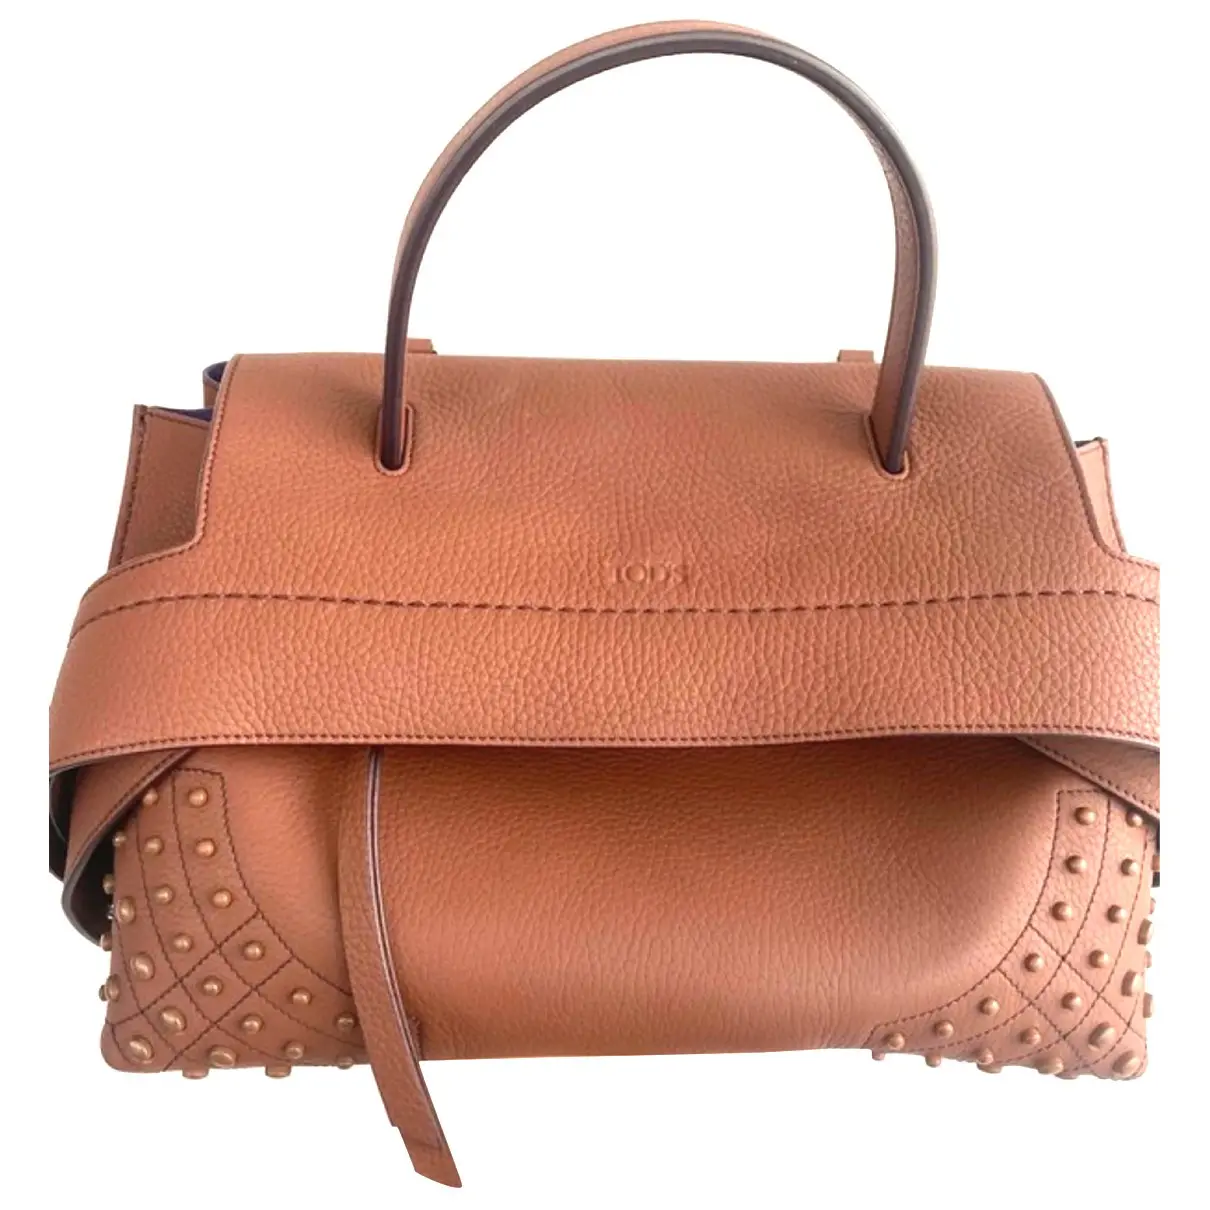 Wave leather handbag Tod's